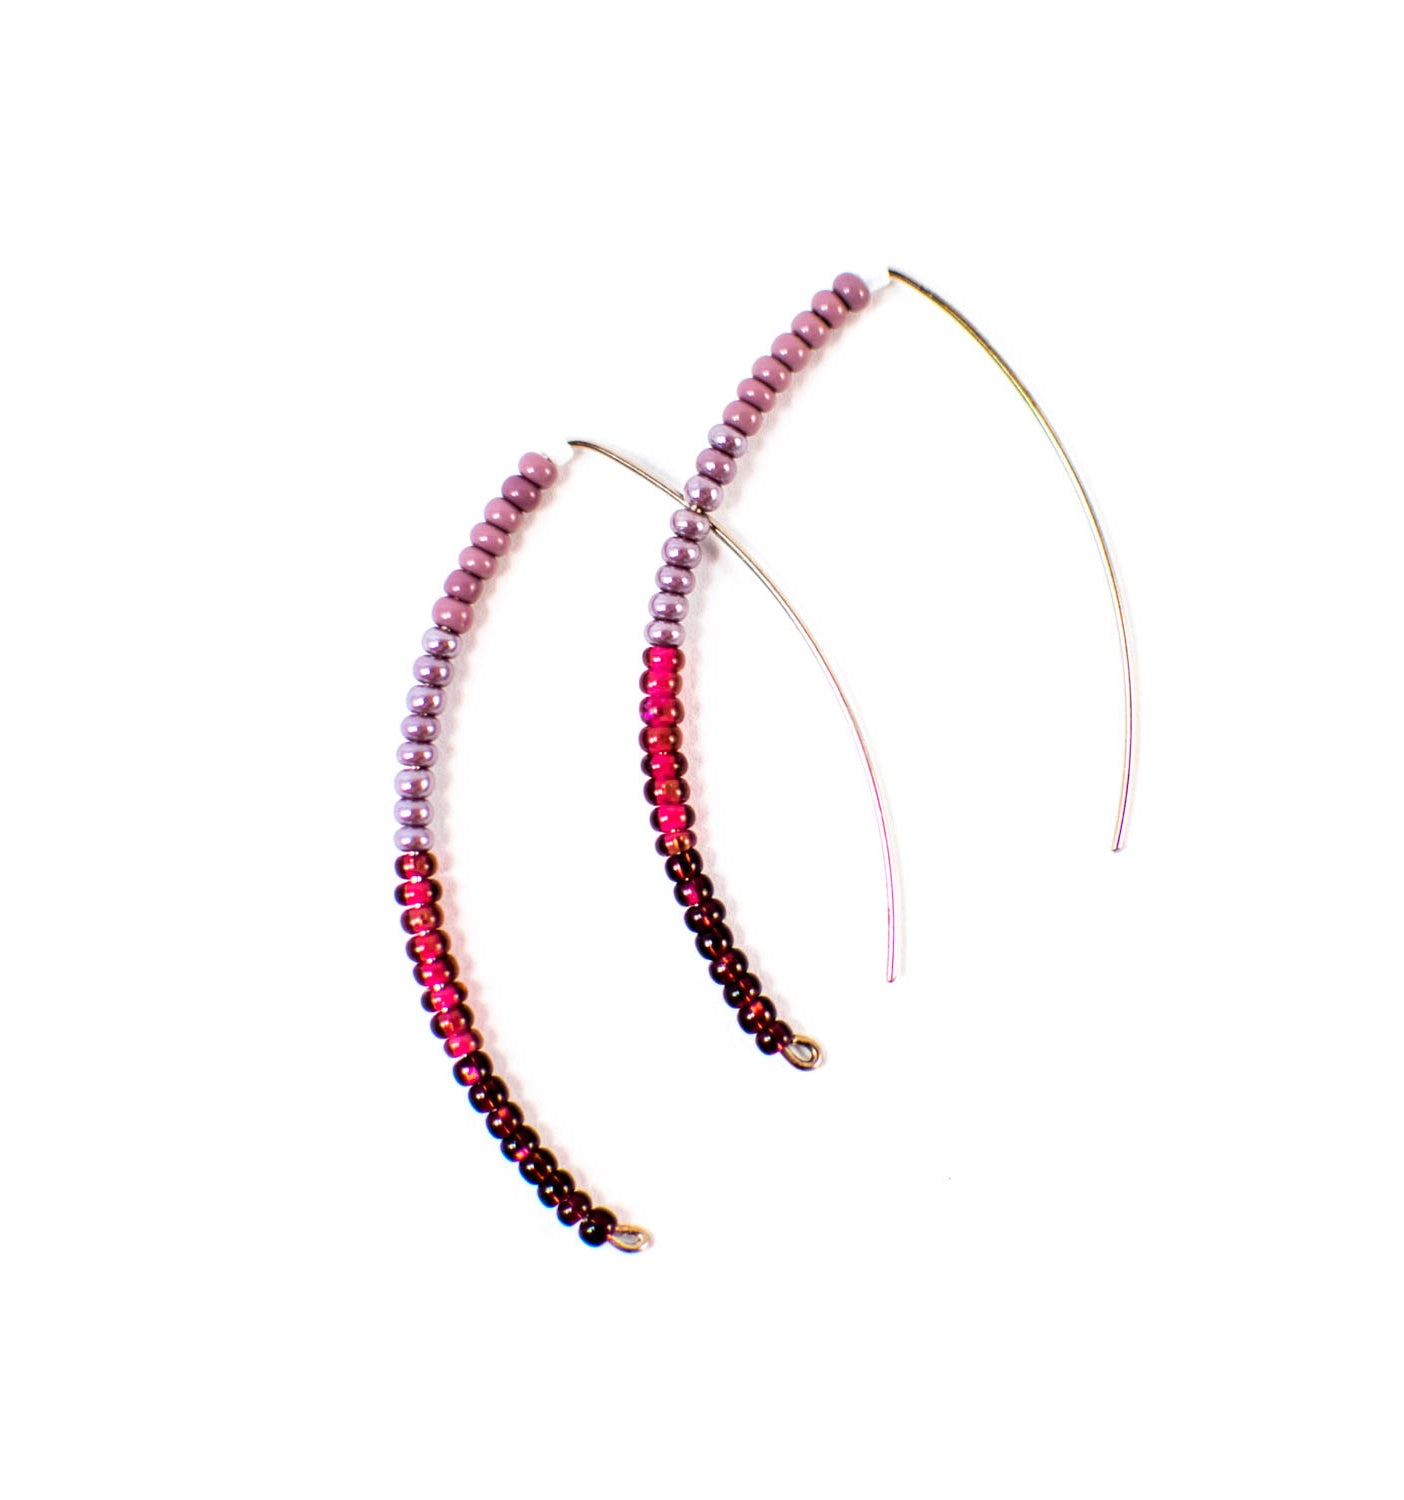 Lucia's World Emporium Fair Trade Handmade Beaded Styx Earrings from Guatemala in Violet